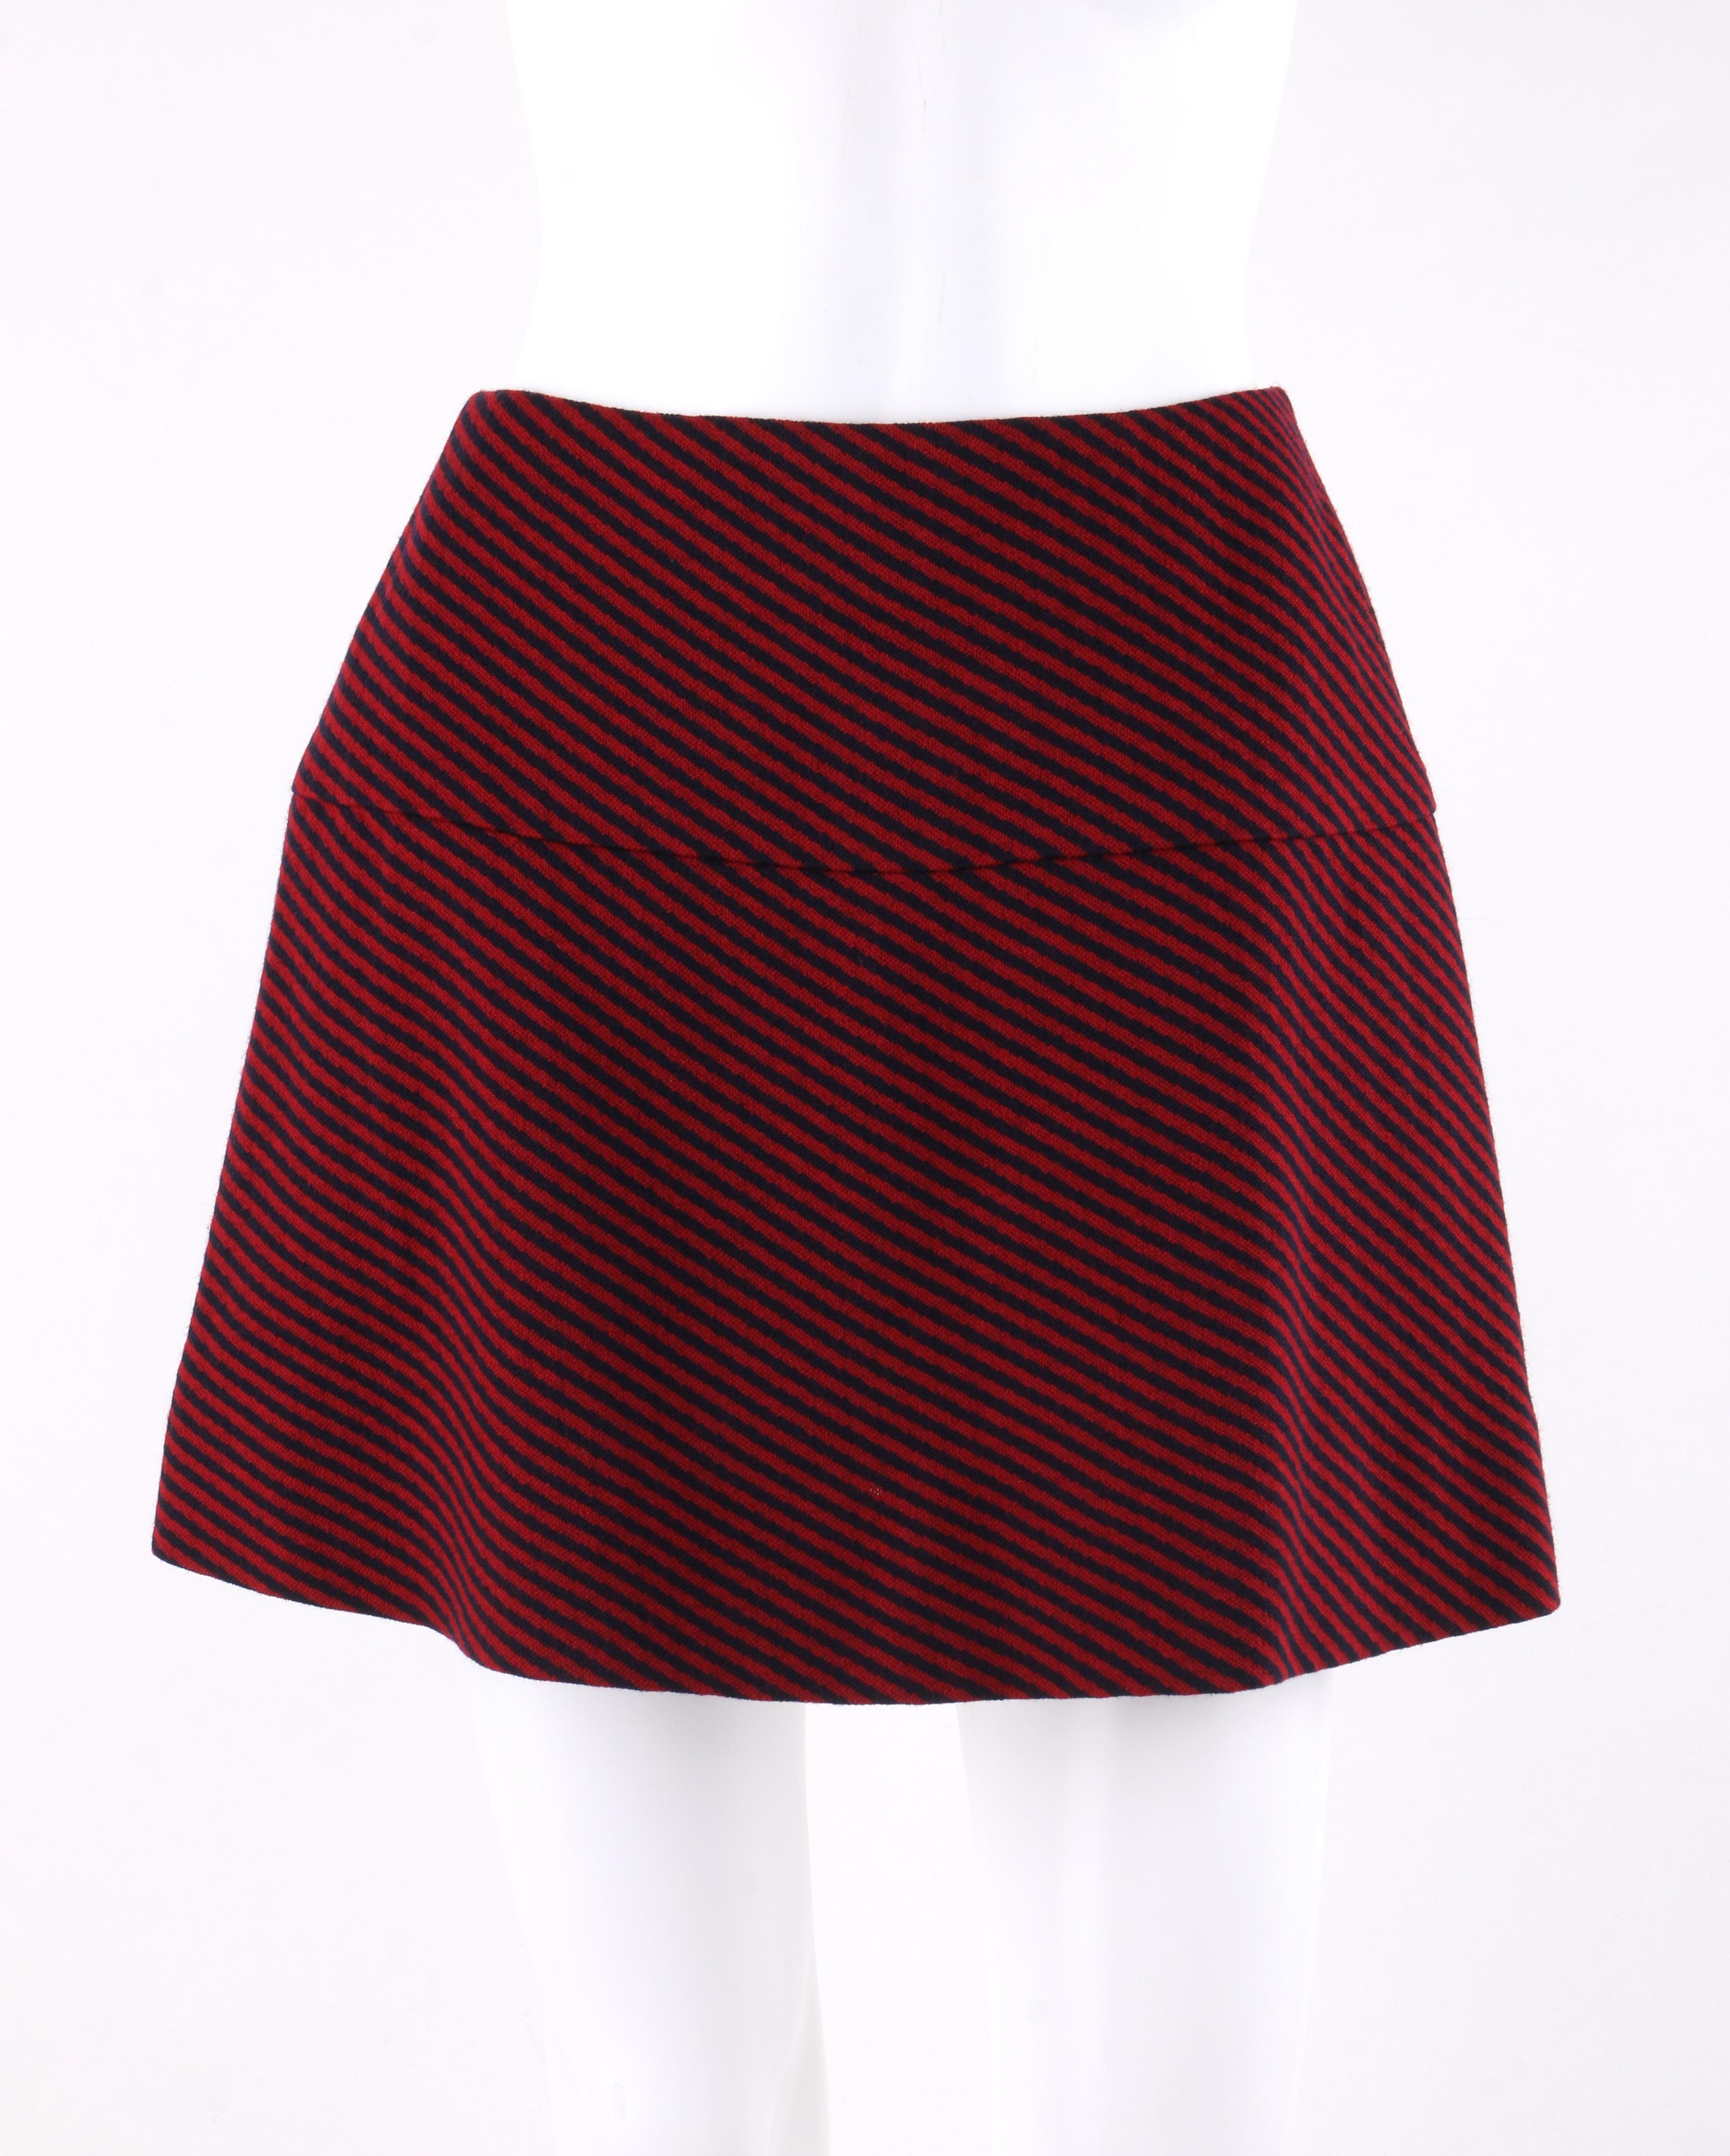 RUDI GERNREICH Harmon Knitwear c.1960's 2pc Raised Knit Stripe Sweater Skirt Set In Good Condition For Sale In Thiensville, WI